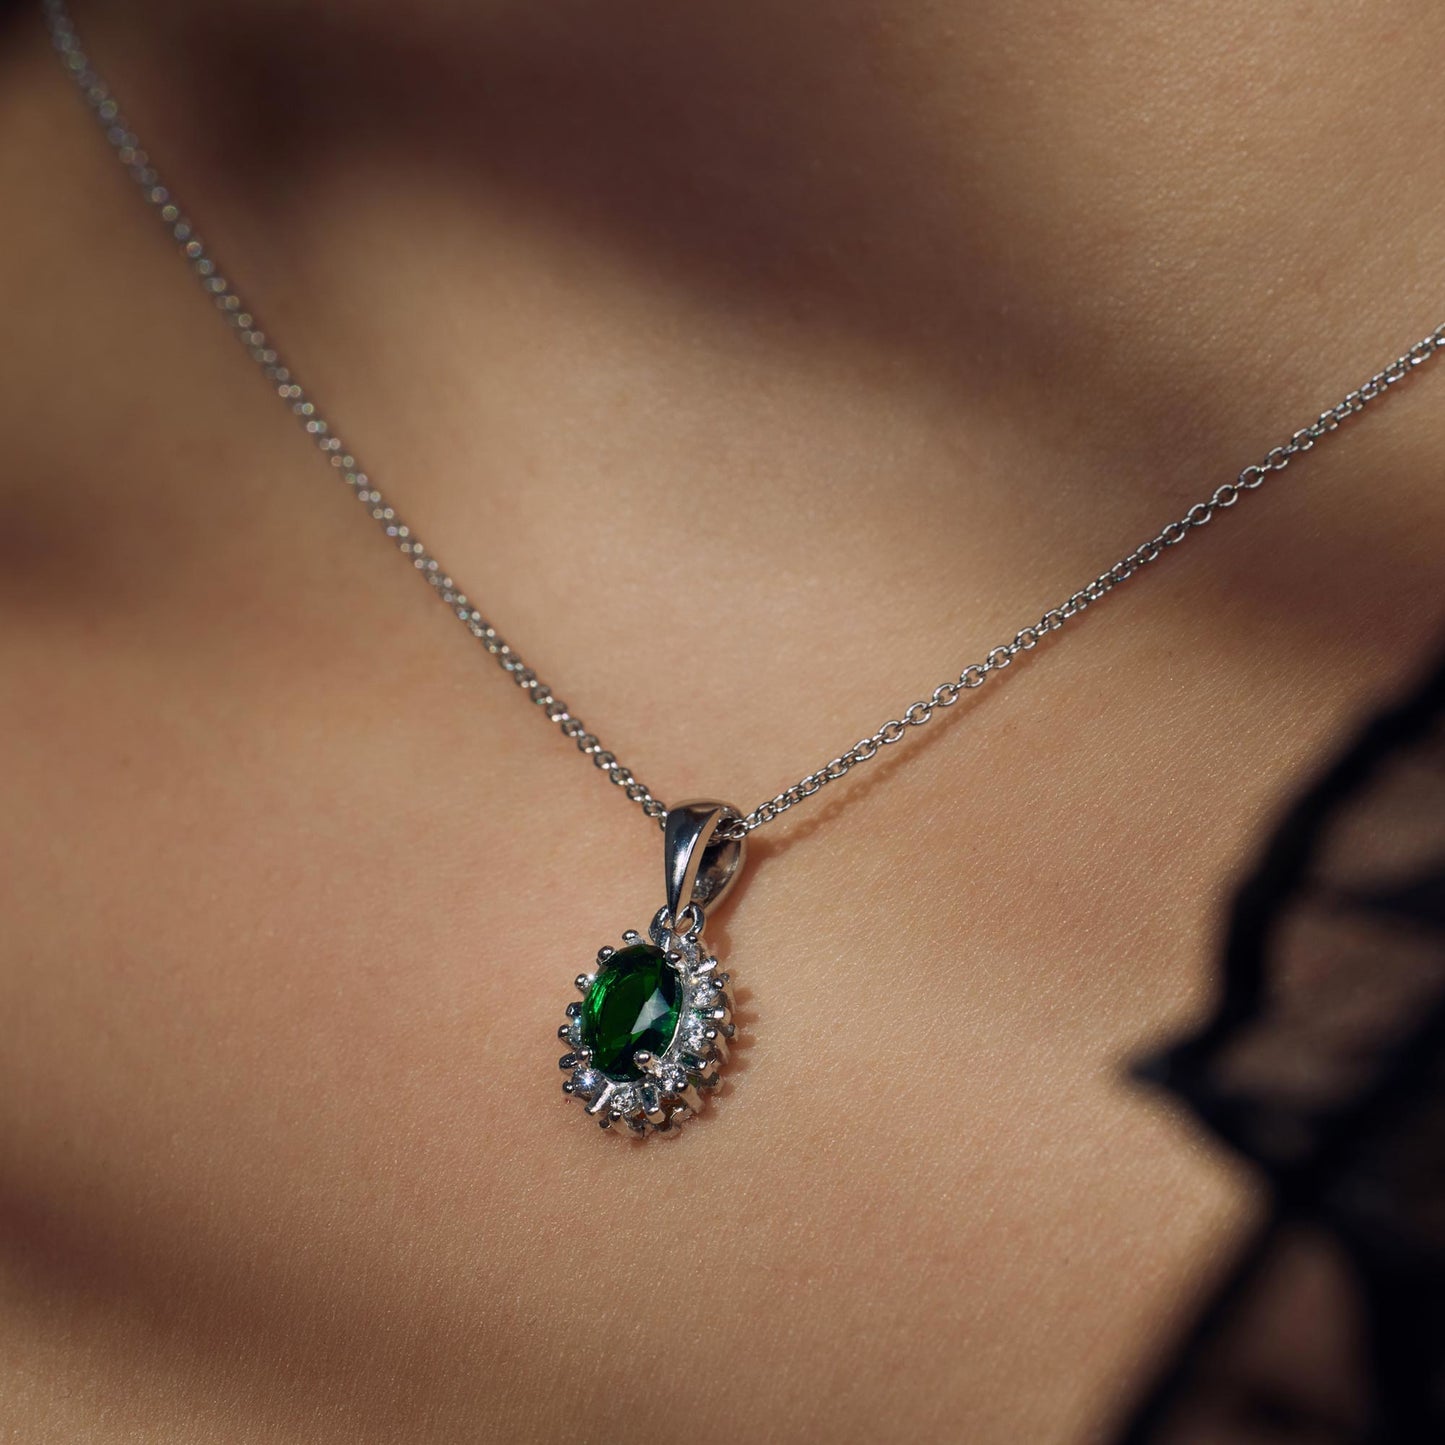 Mia Colore Verdi collier en argent sterling 925 avec pierre de zircone verte